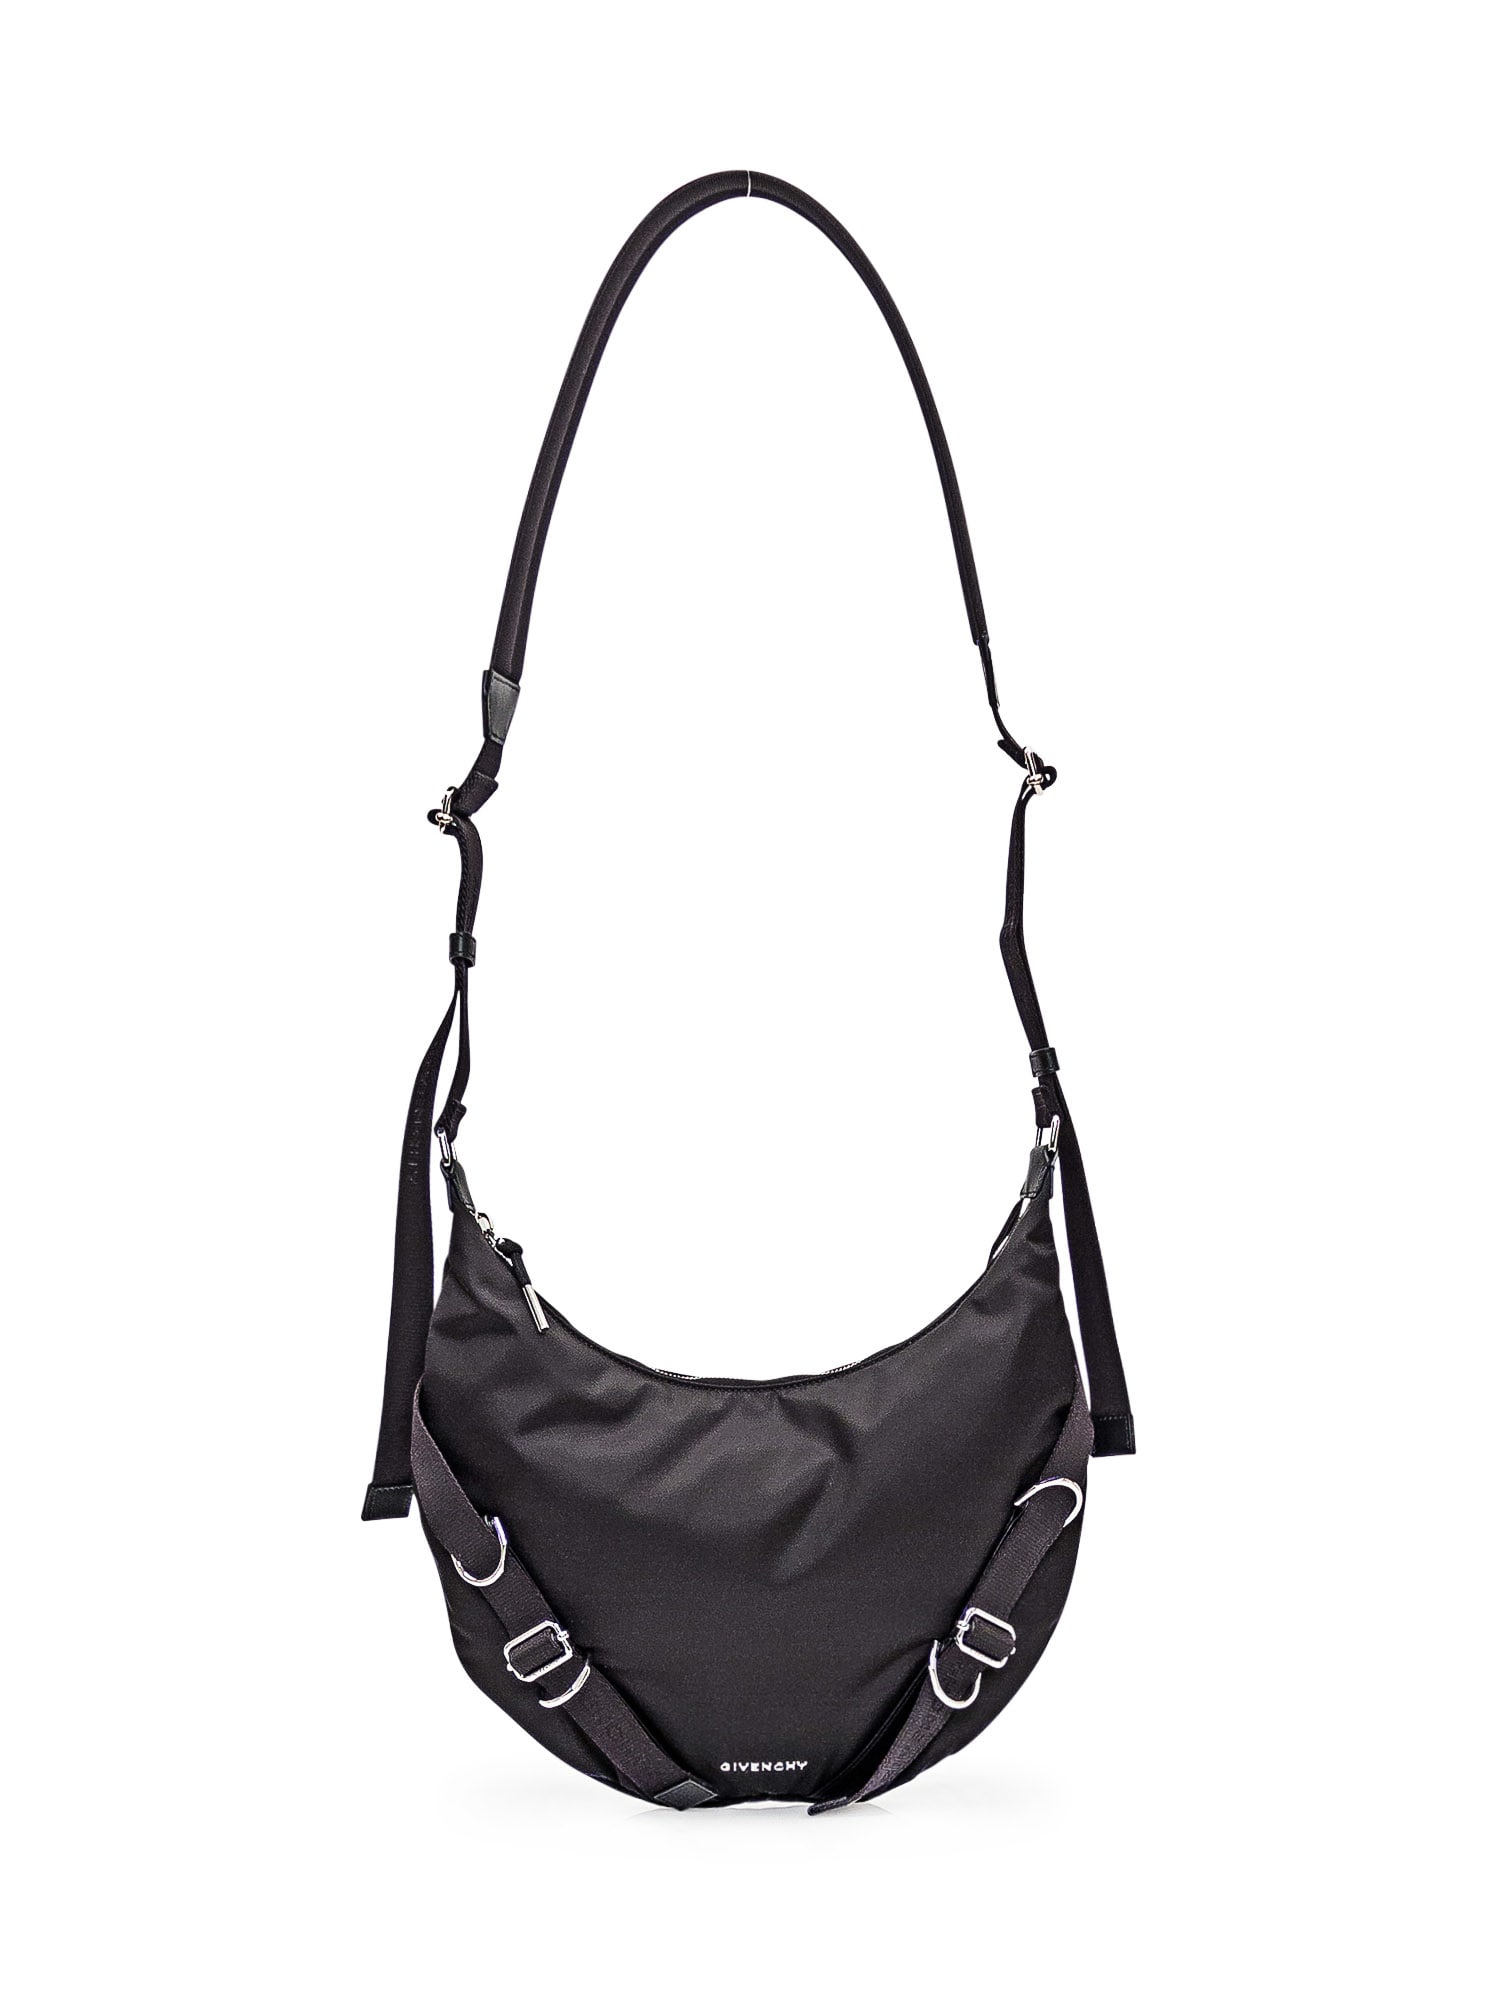 Givenchy Voyou Bag In Black